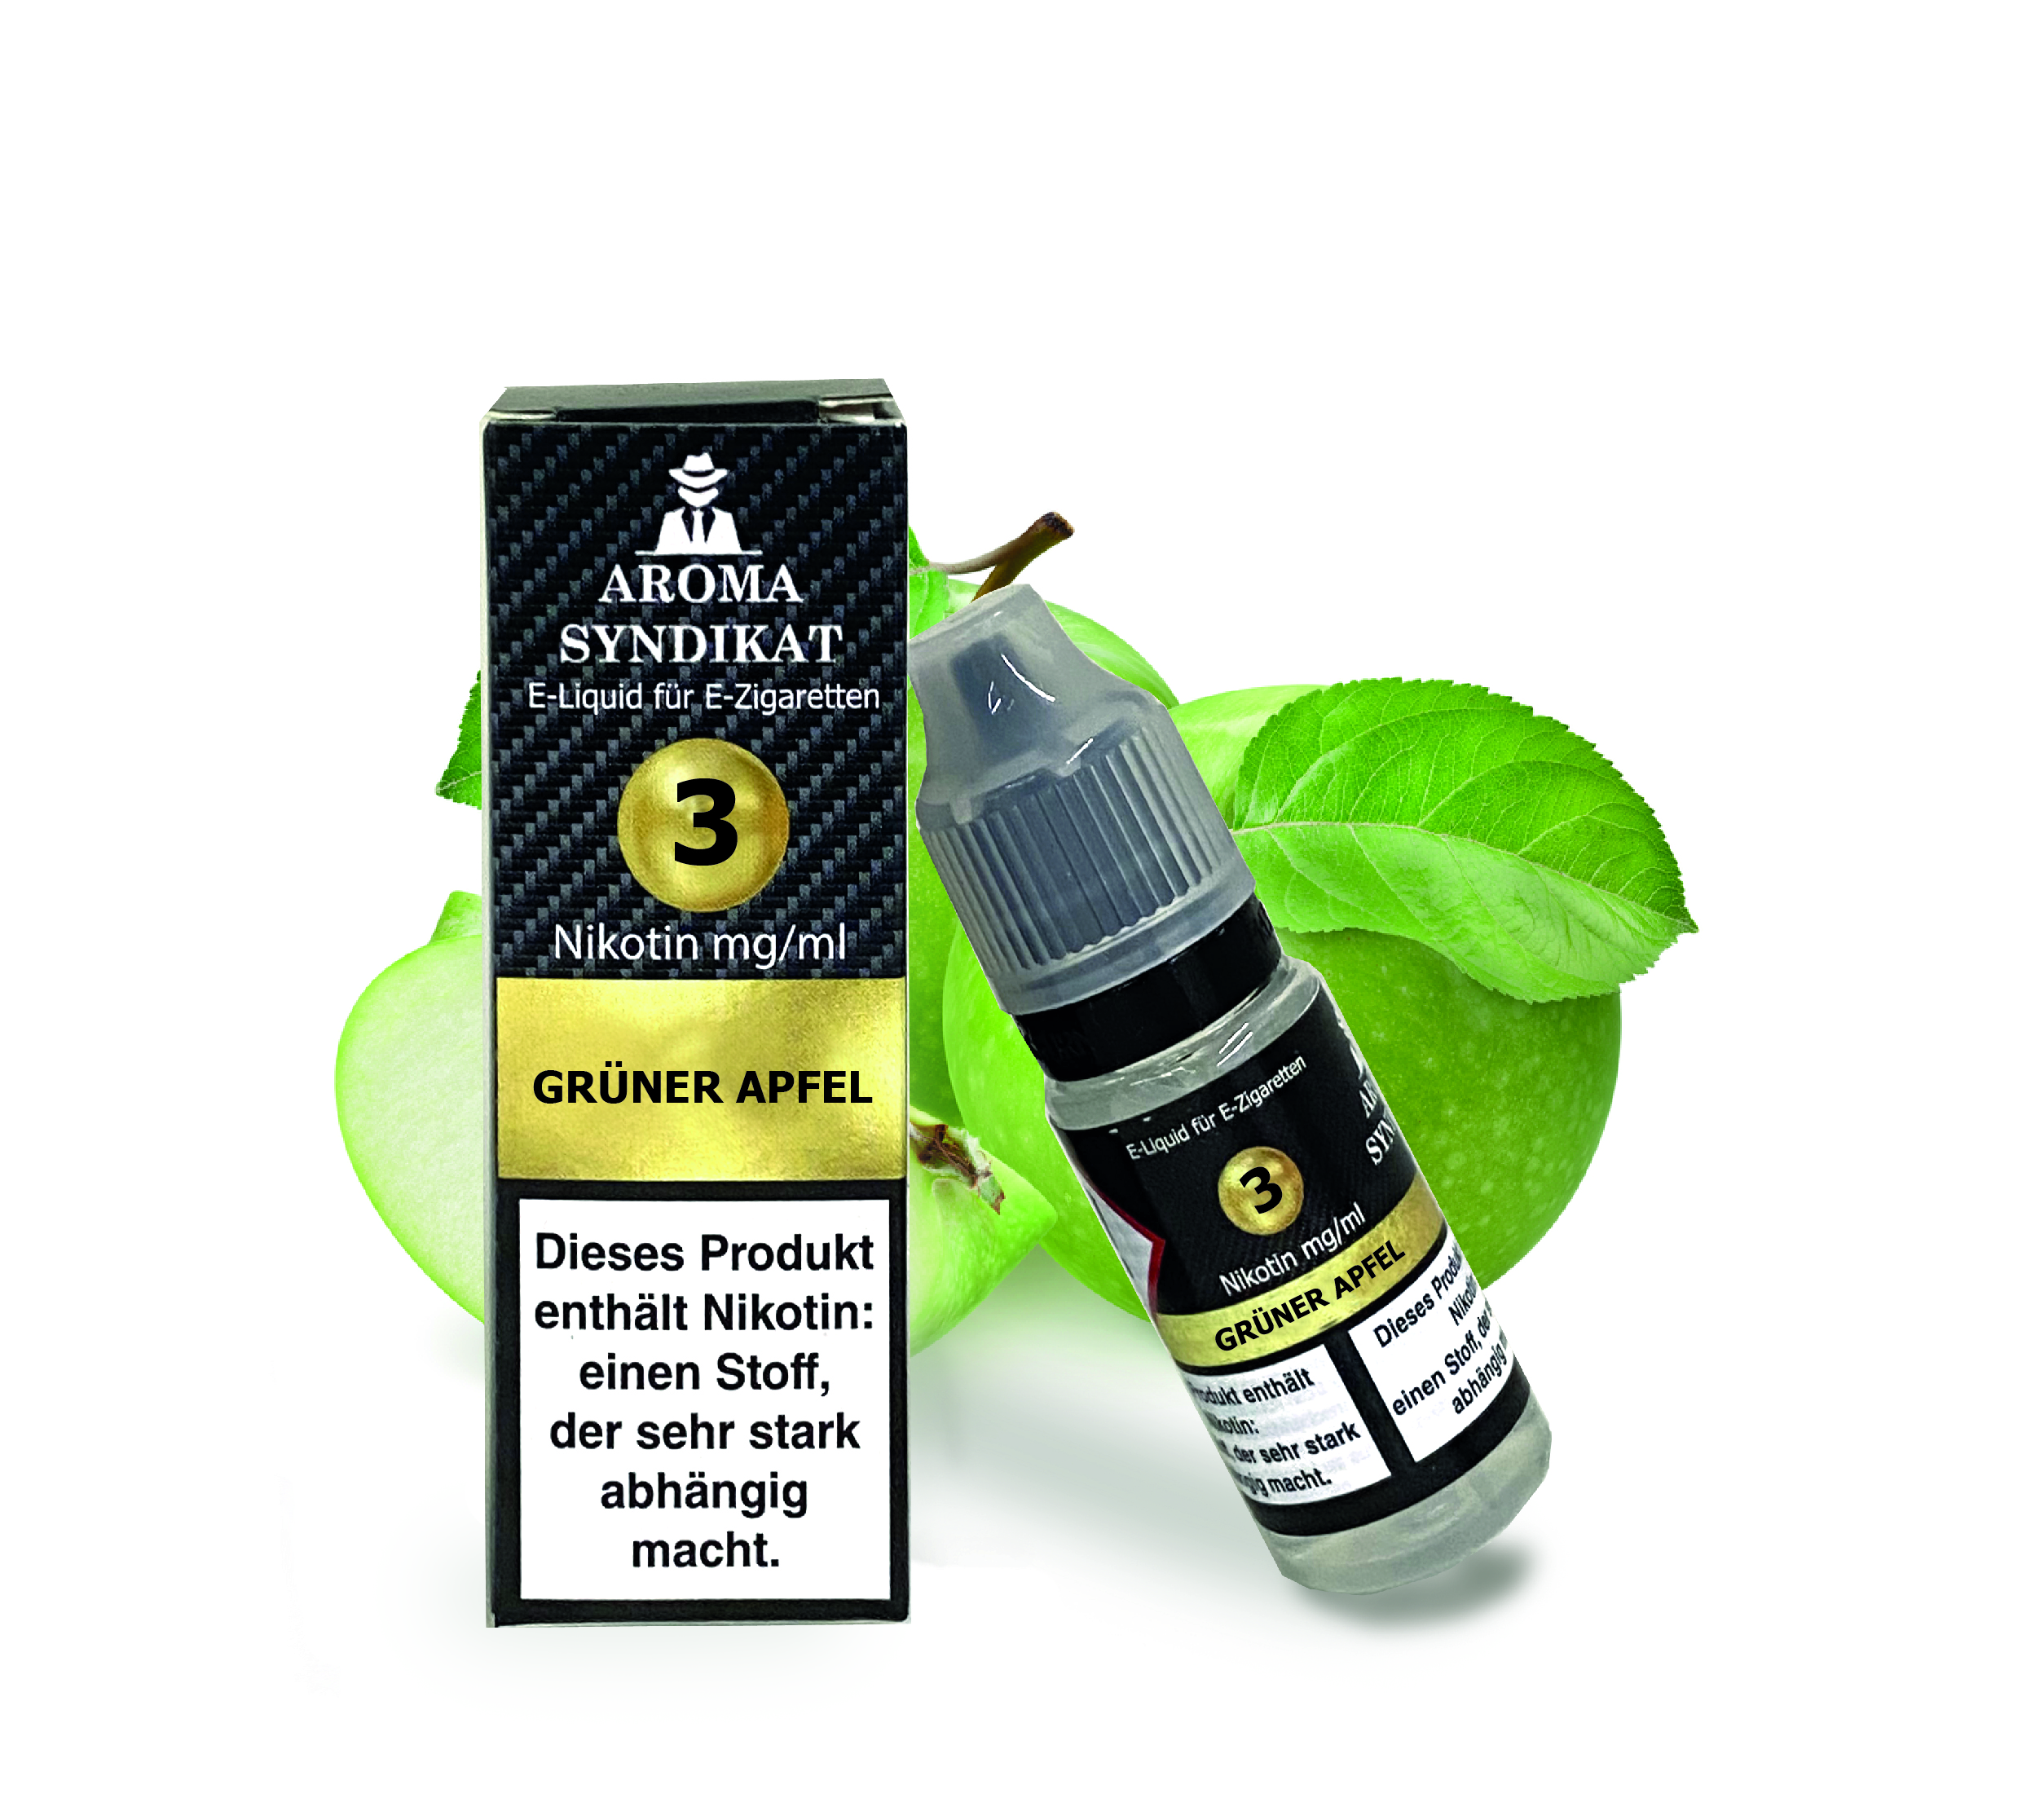 Aroma Syndikat - Grüner Apfel - E-liquid für E-Zigaretten